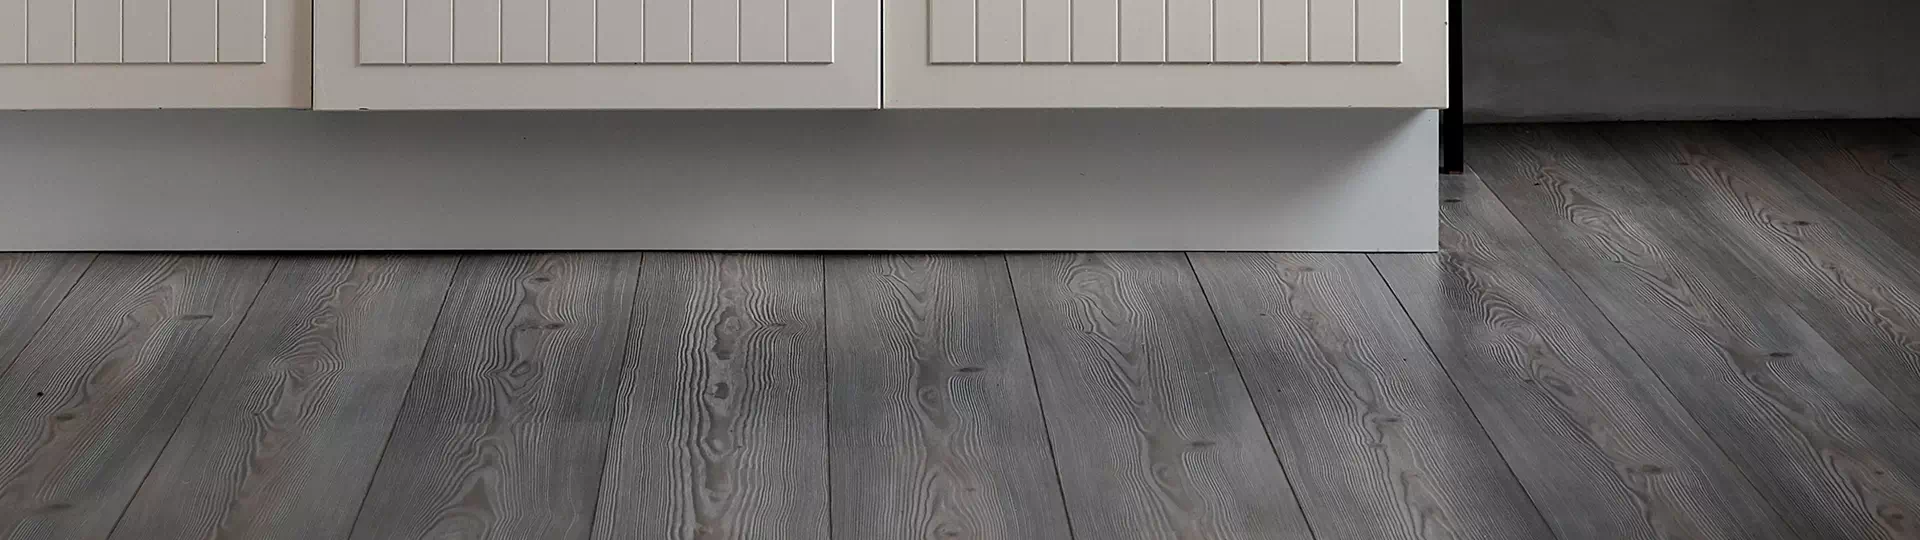 How To Clean Engineered Hardwood Floors, White Vinegar On Hardwood Floors